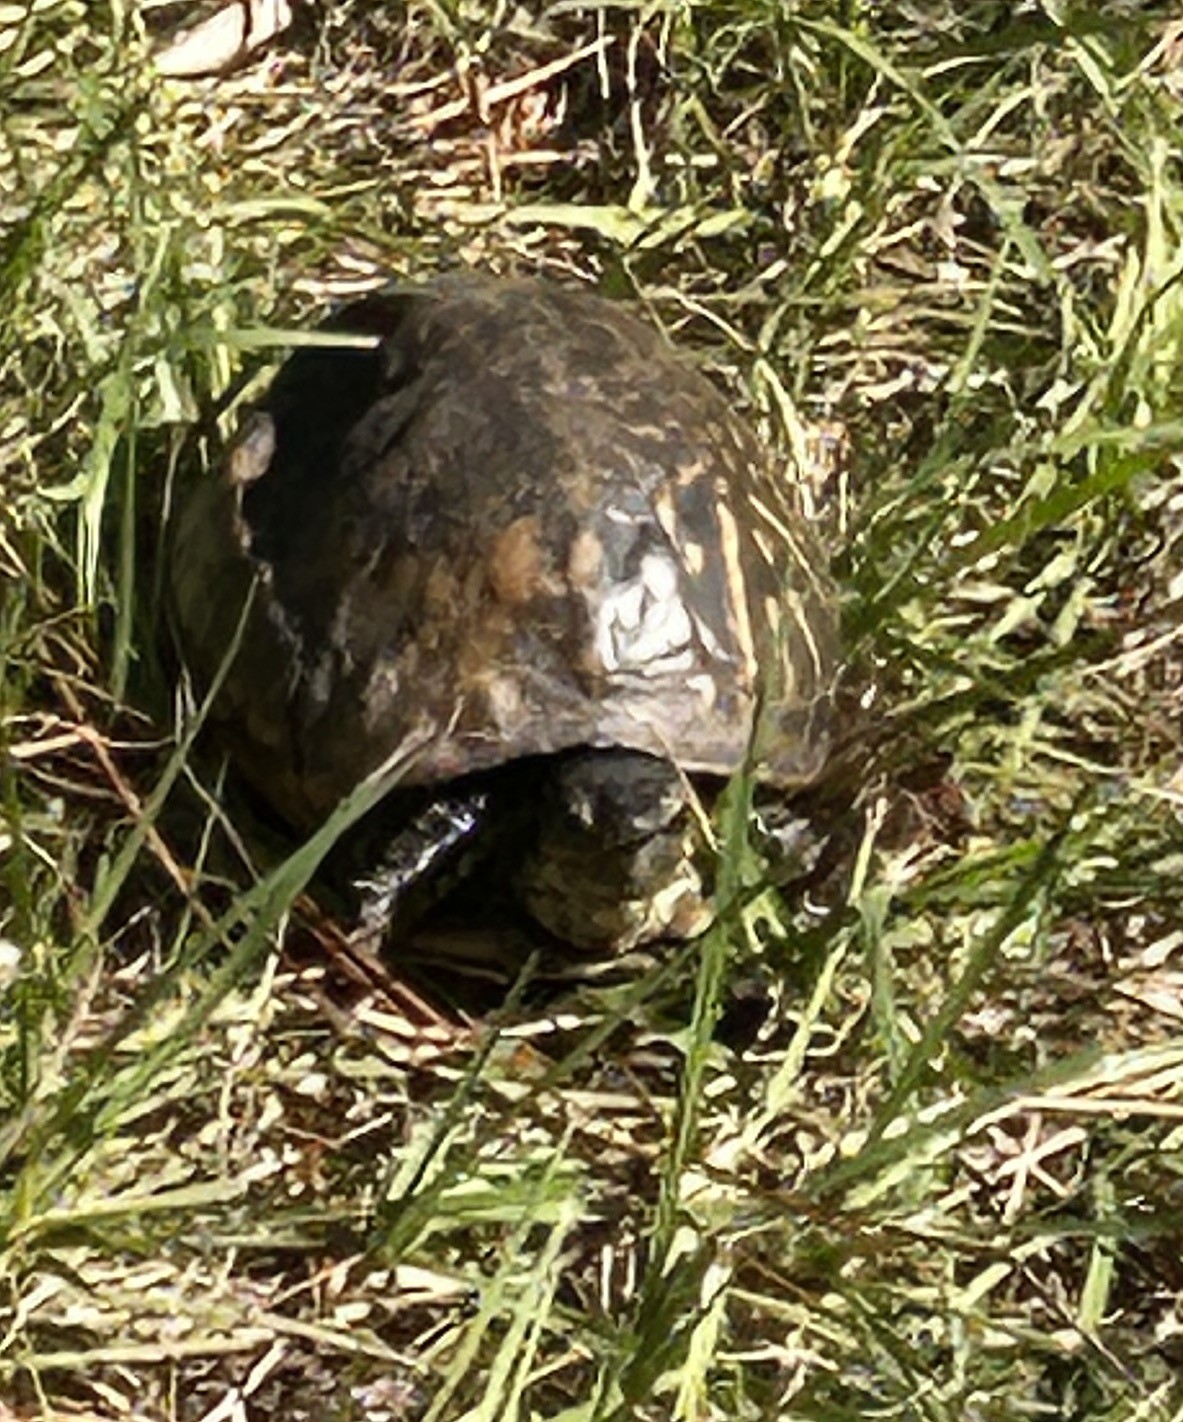 Florida box turtle seen today in Jacksonville, Florida